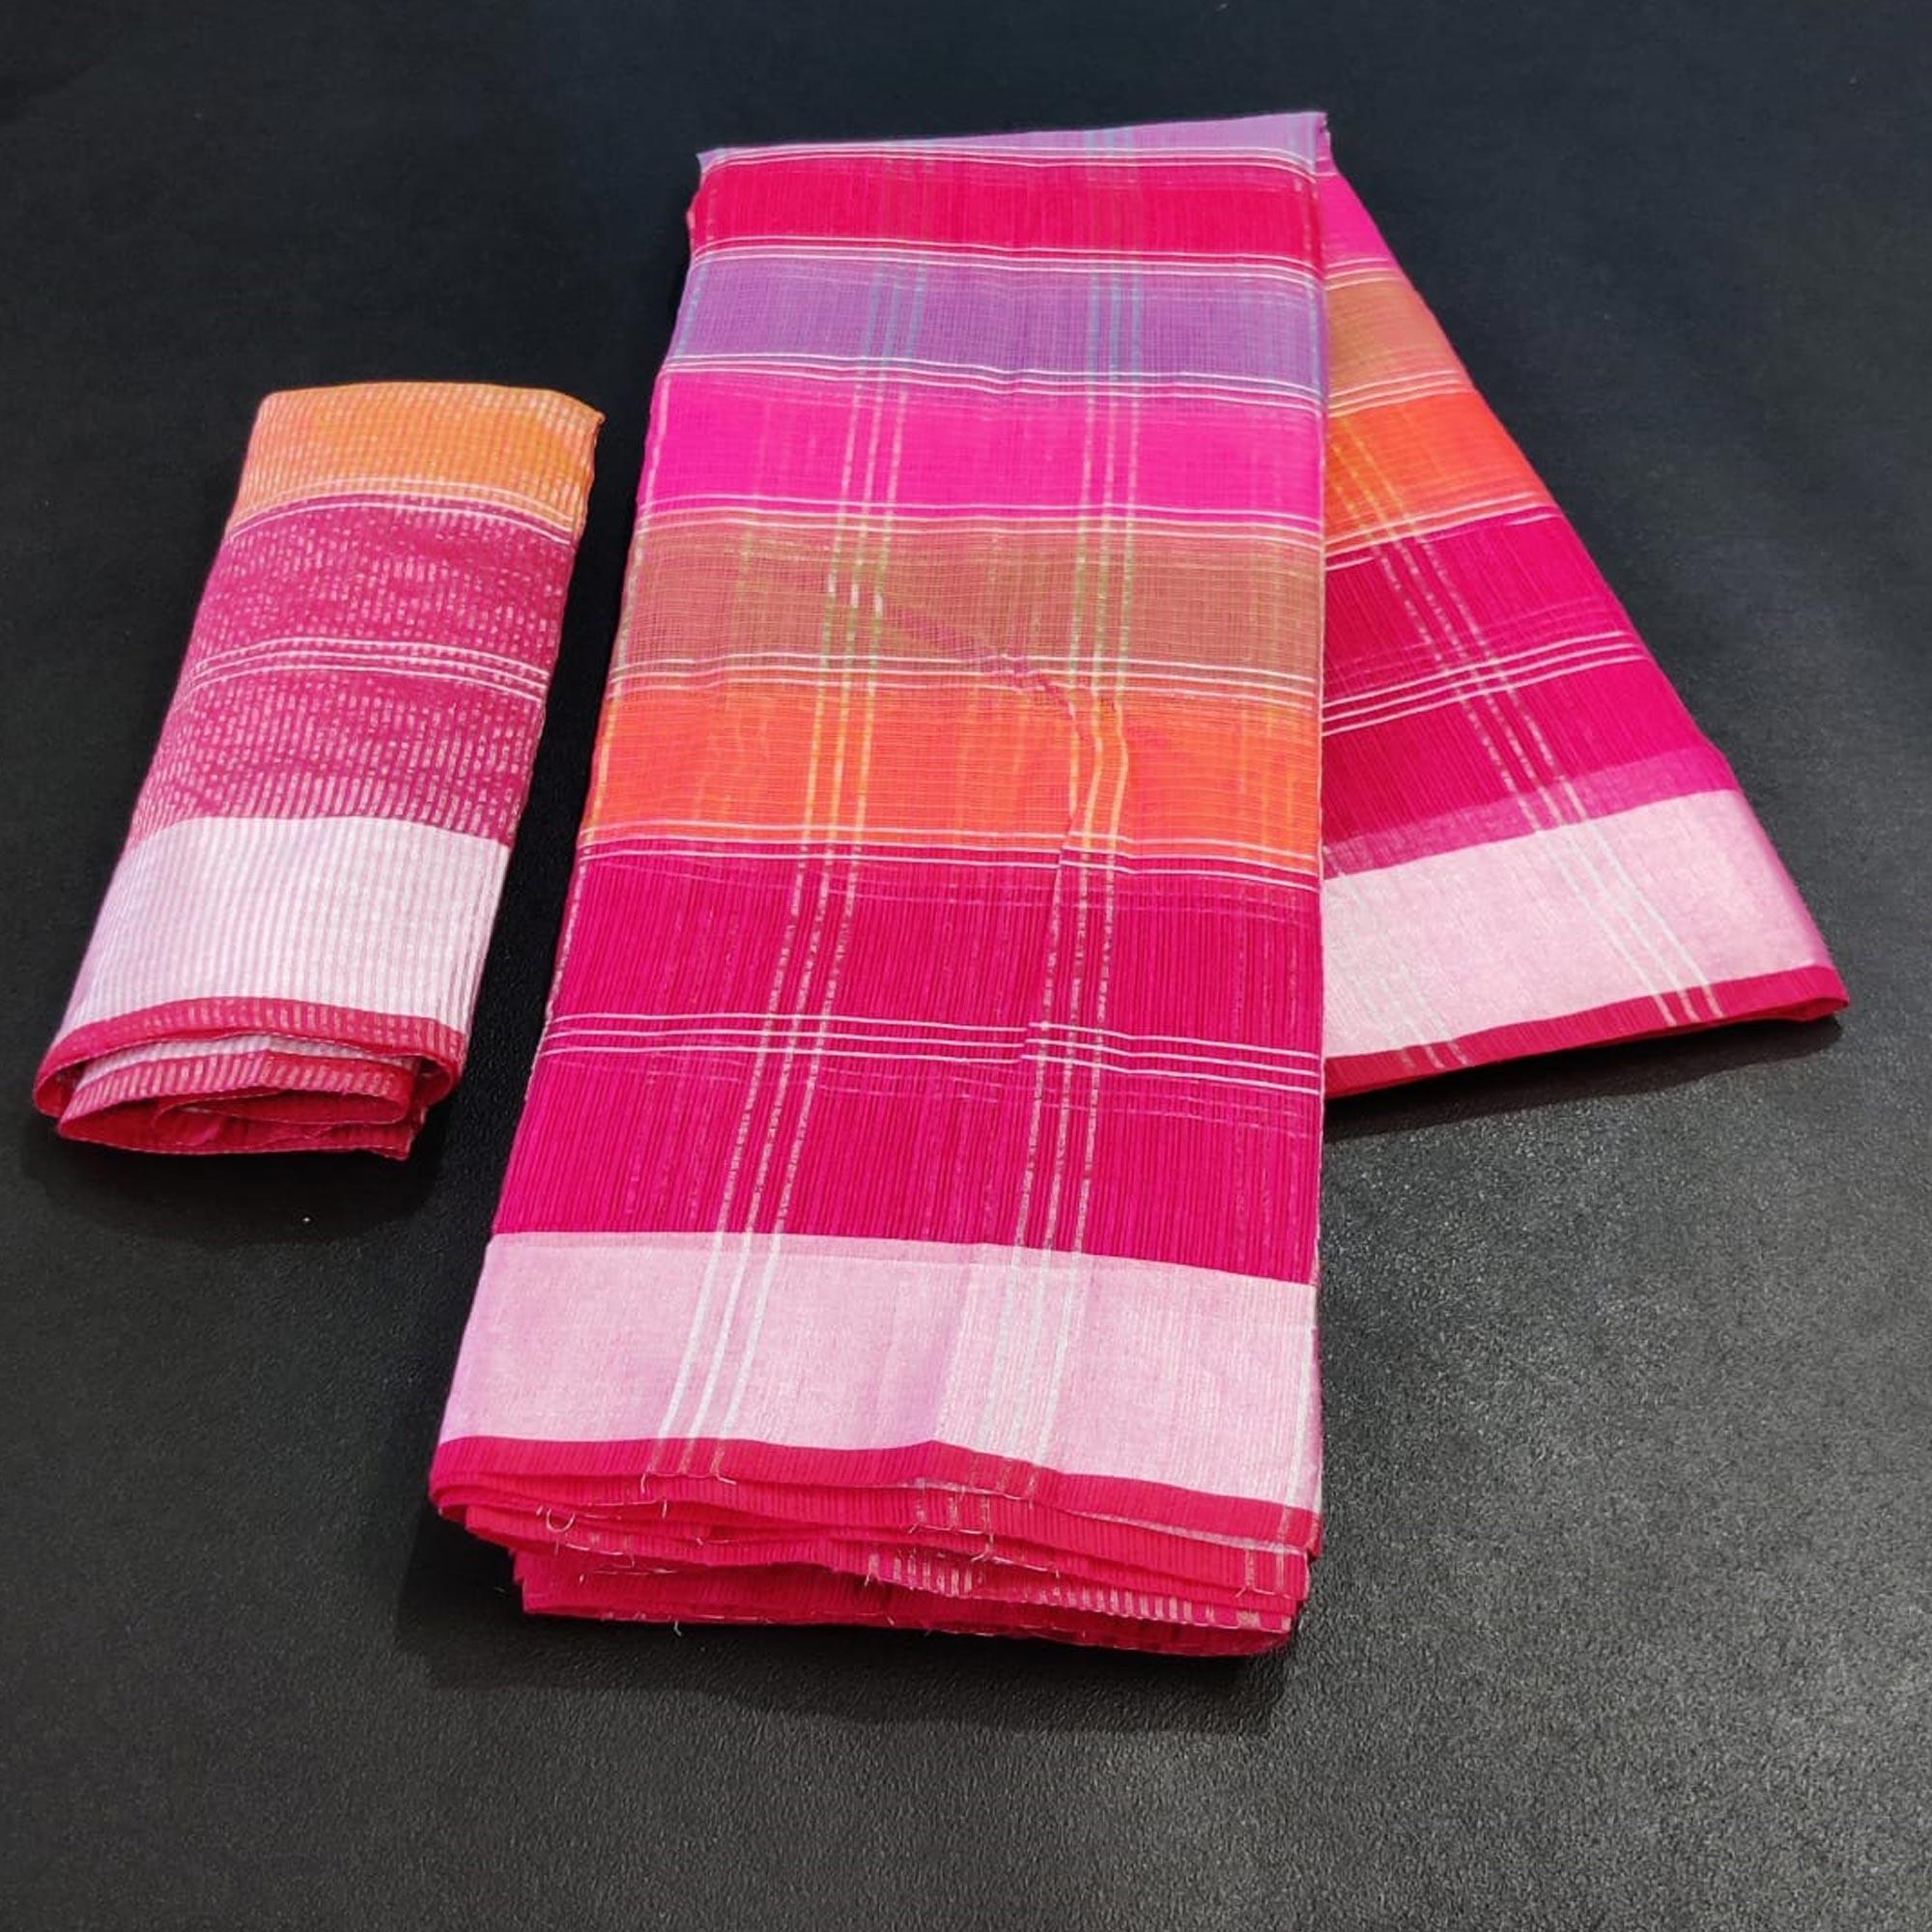 Dark Pink Casual Wear Checks Printed Silk Saree With Border - Peachmode